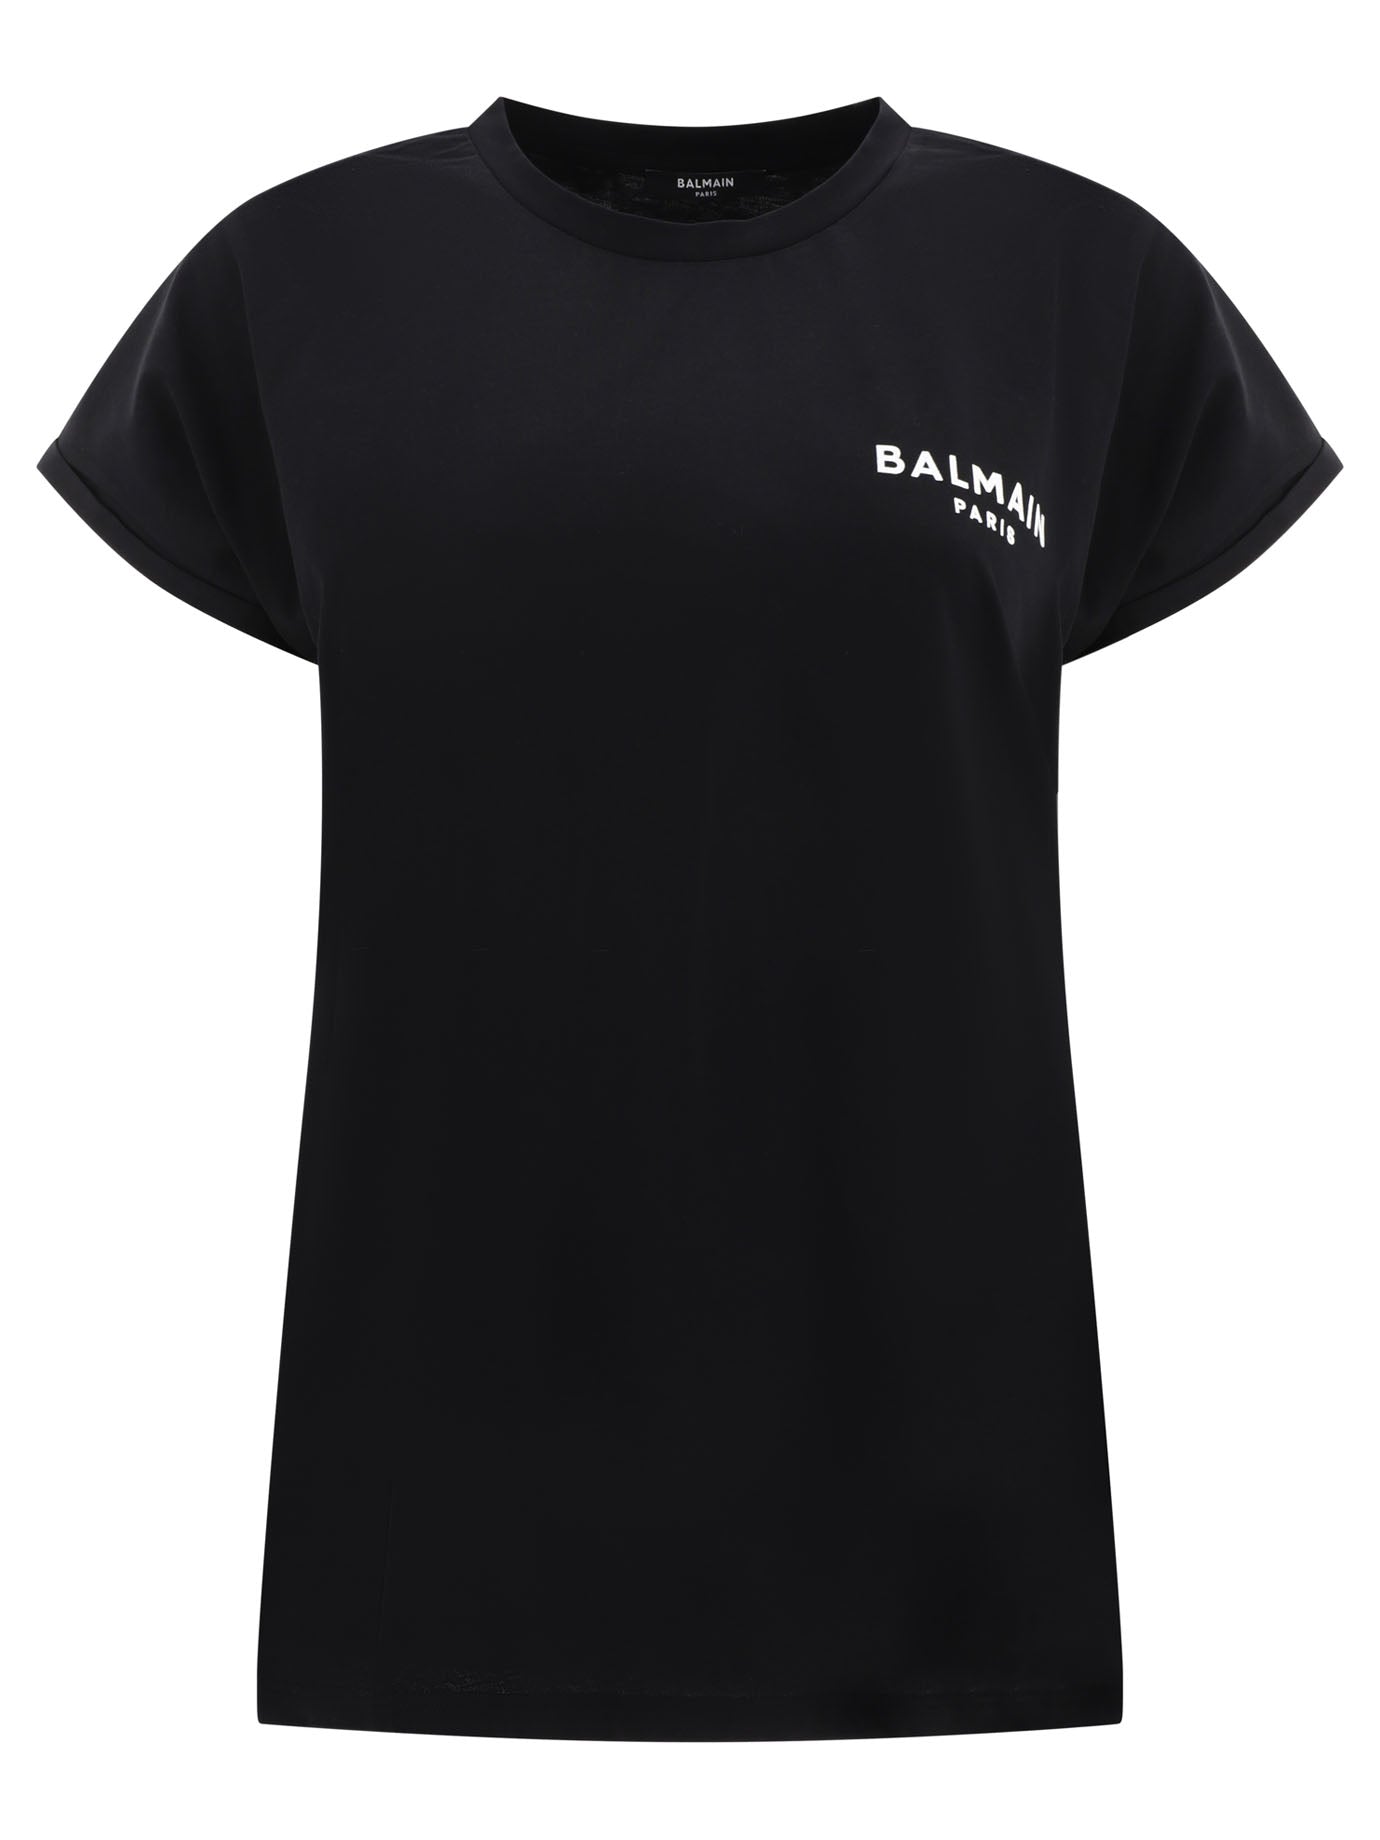 Balmain T Shirt With Flock Detail